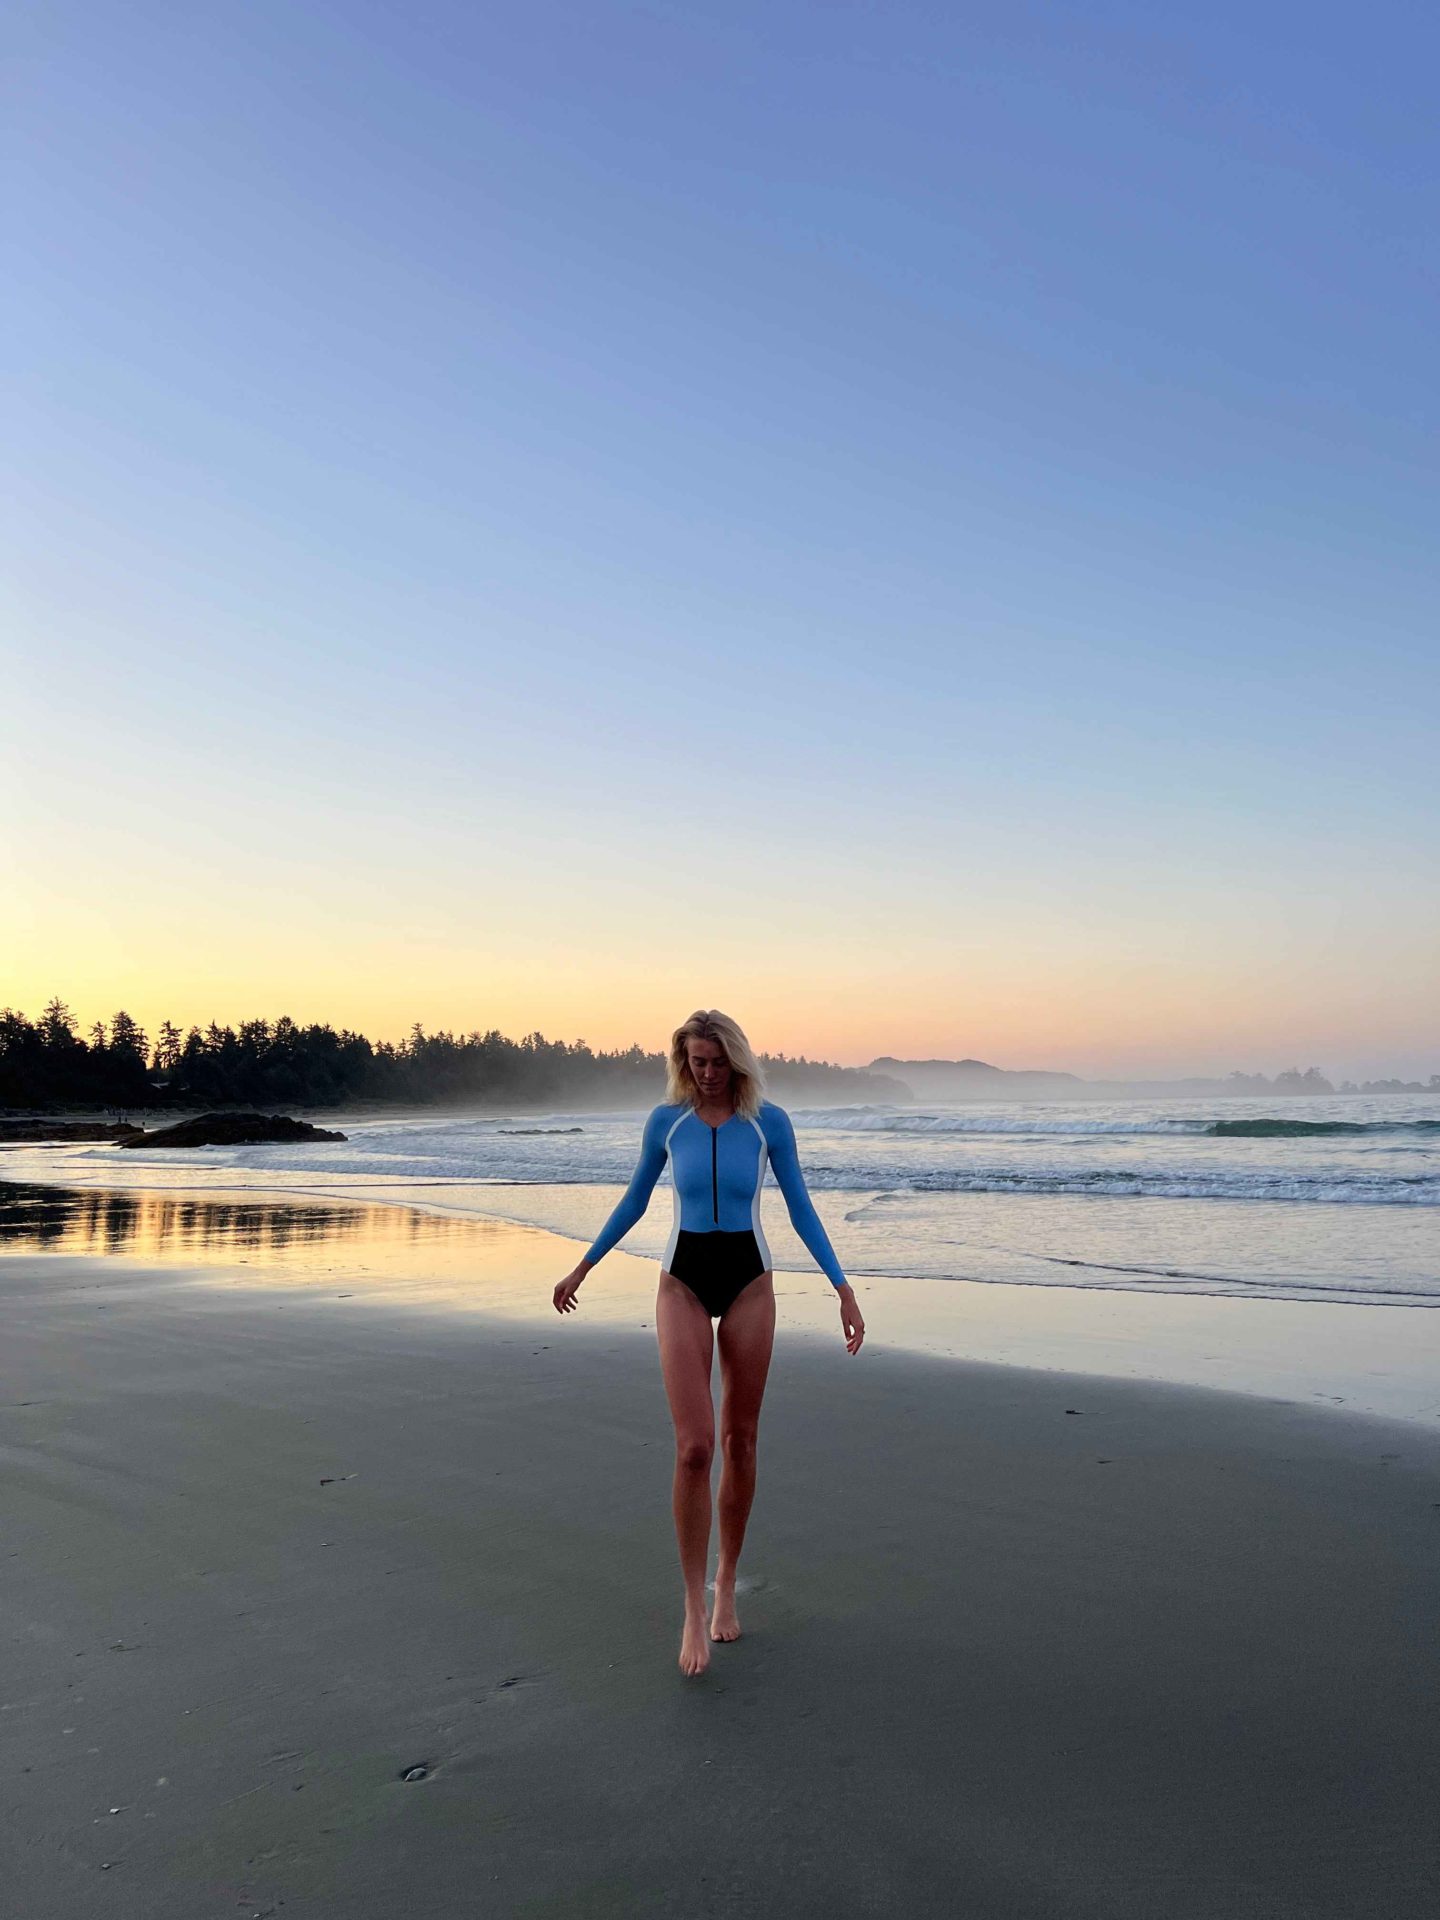 Zanna van Dijk wearing Stay Wild Swim on the beach in Tofino at dusk - Canada Road Trip Itinerary